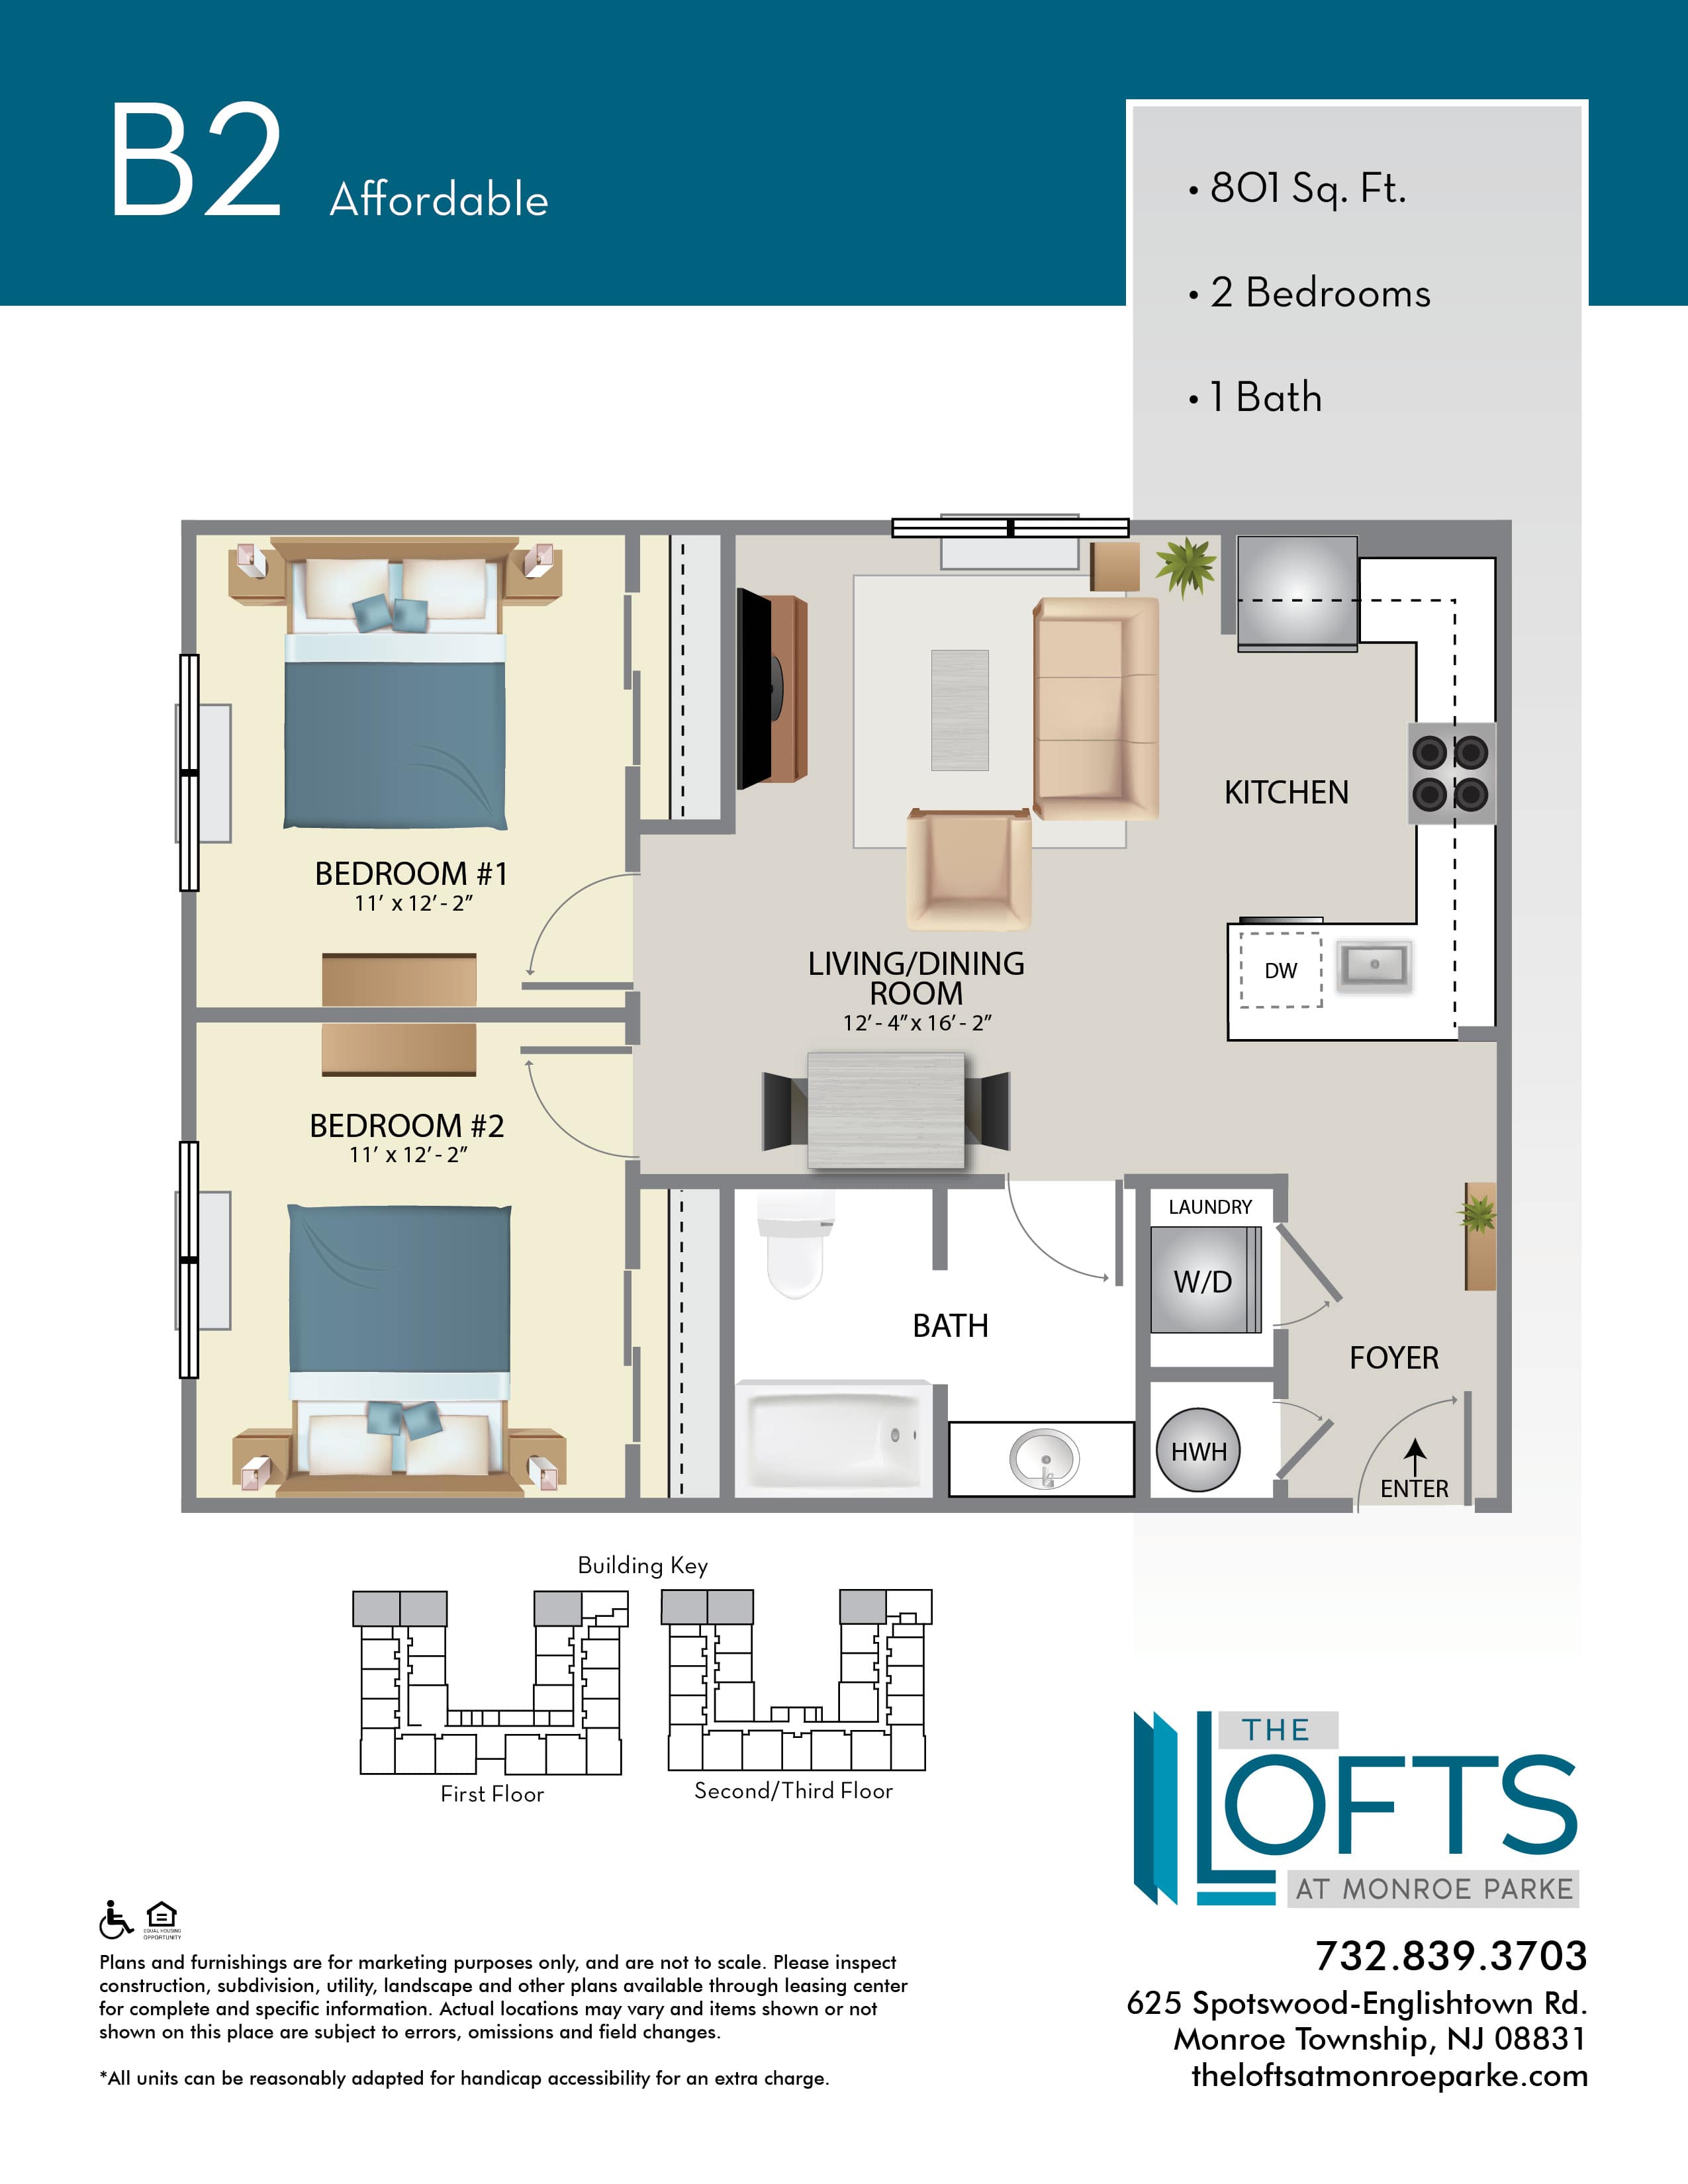 The Lofts at Monroe Park Apartment Floor Plan 2C